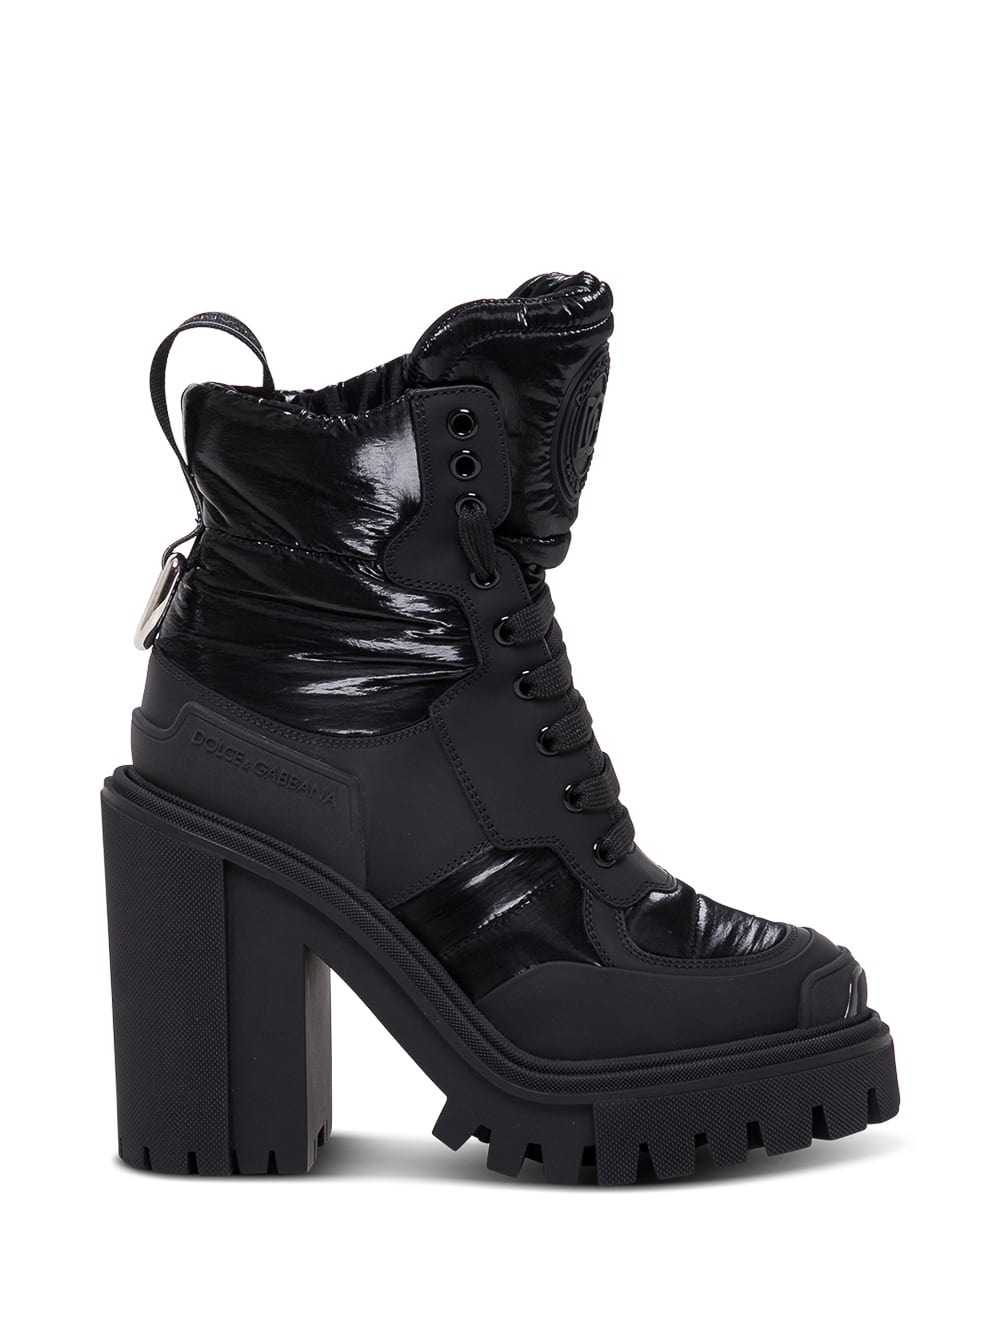 Dolce & Gabbana Black Leather And Nylon Trekking Boots